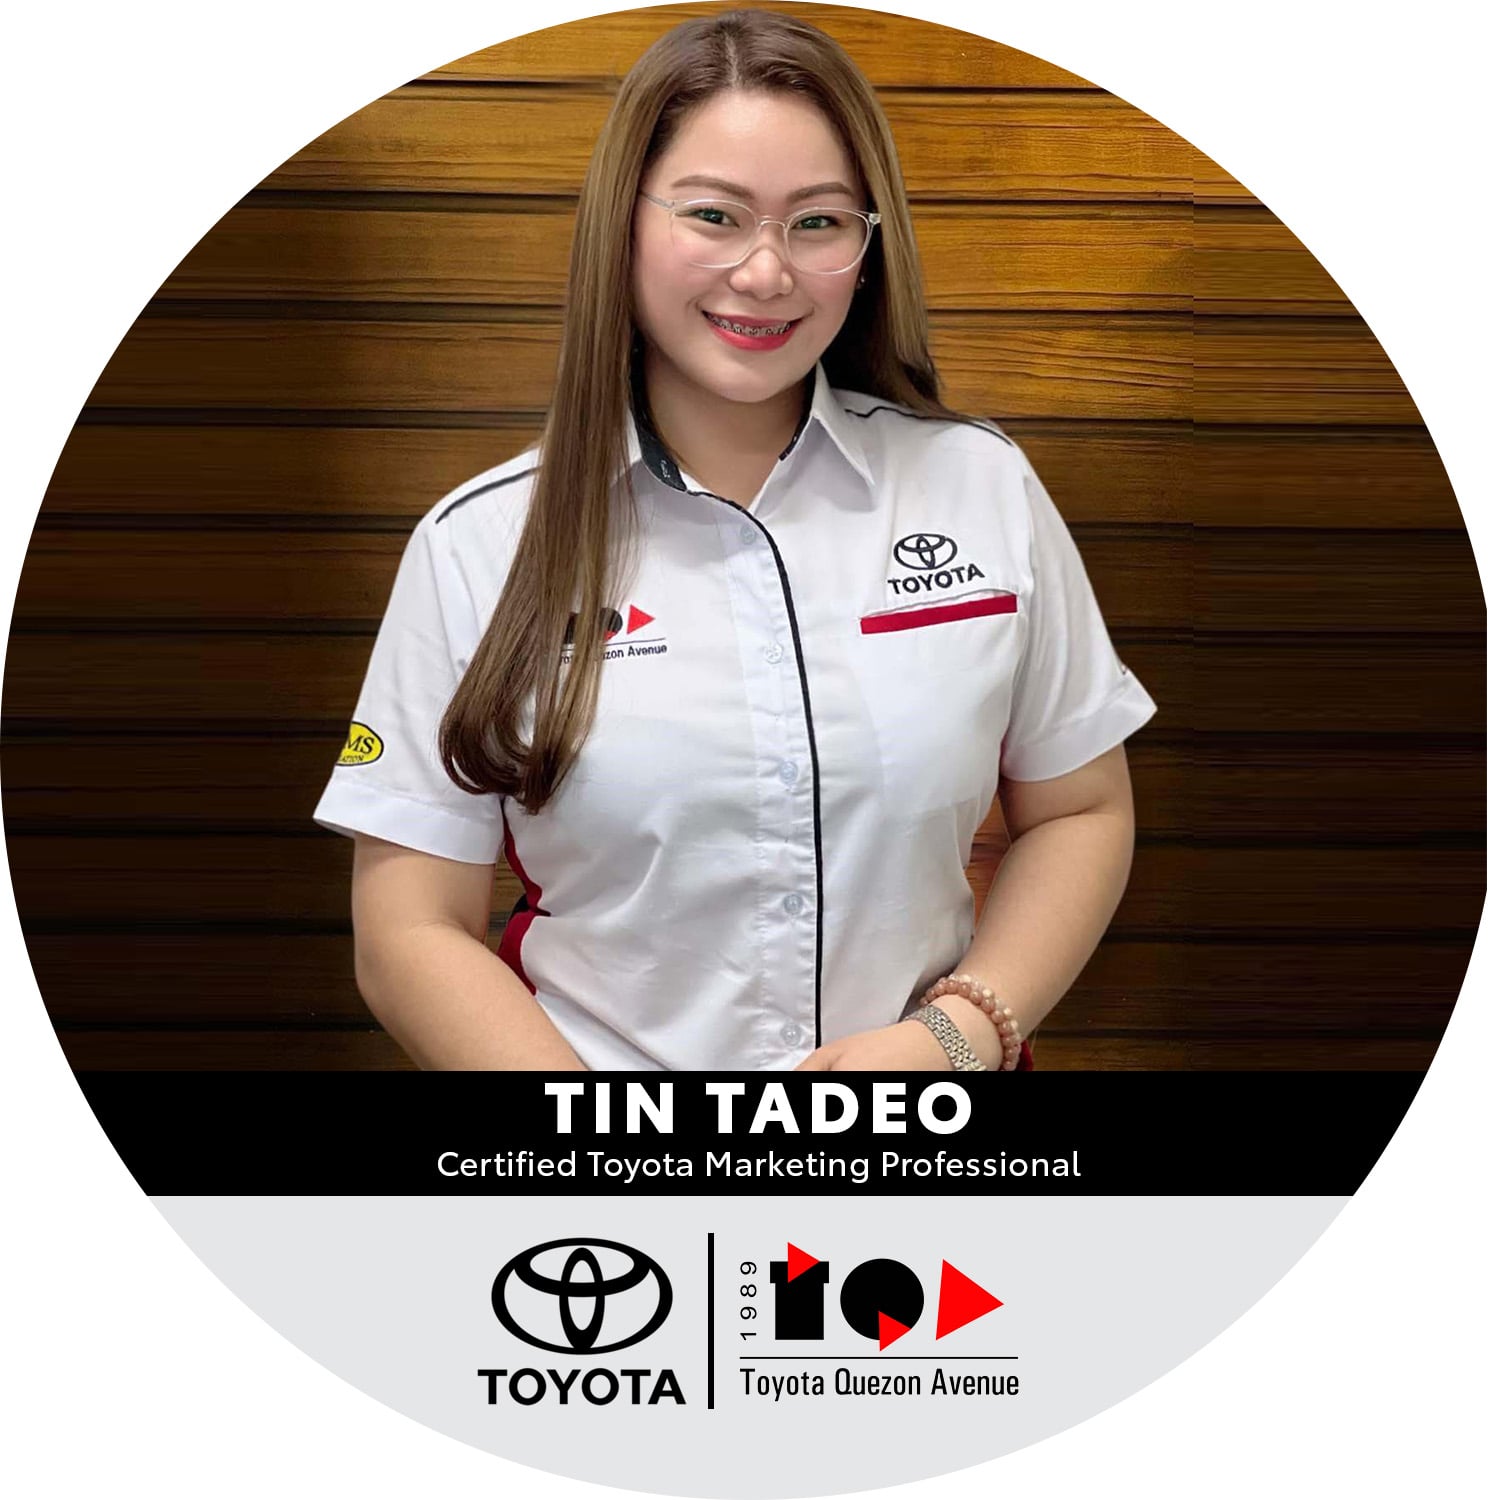 Certified Toyota Marketing Professionals - Tin Tadeo